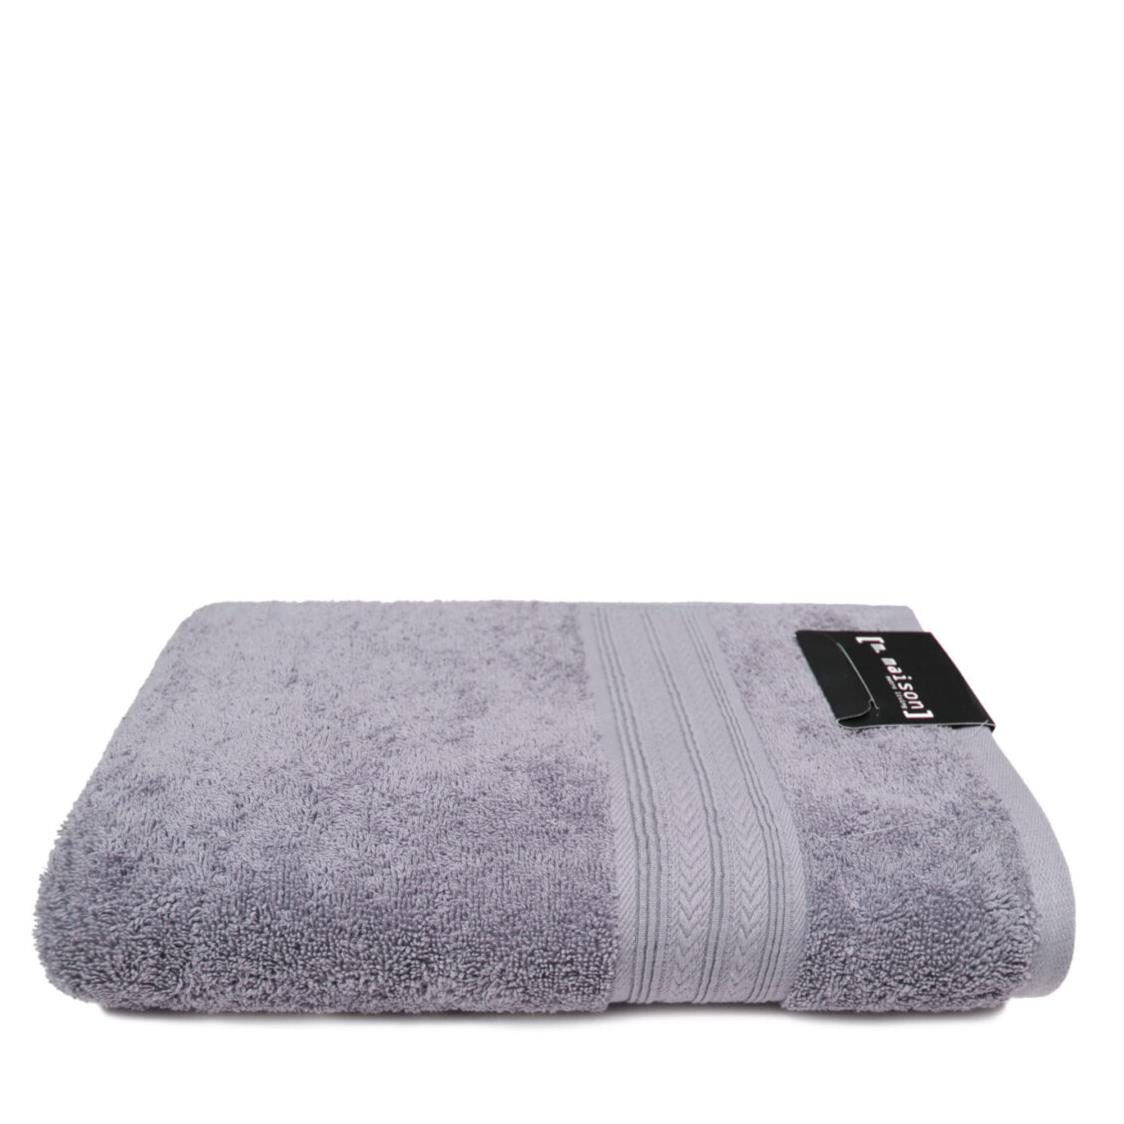 M Maison AVA Bath Towel Gray